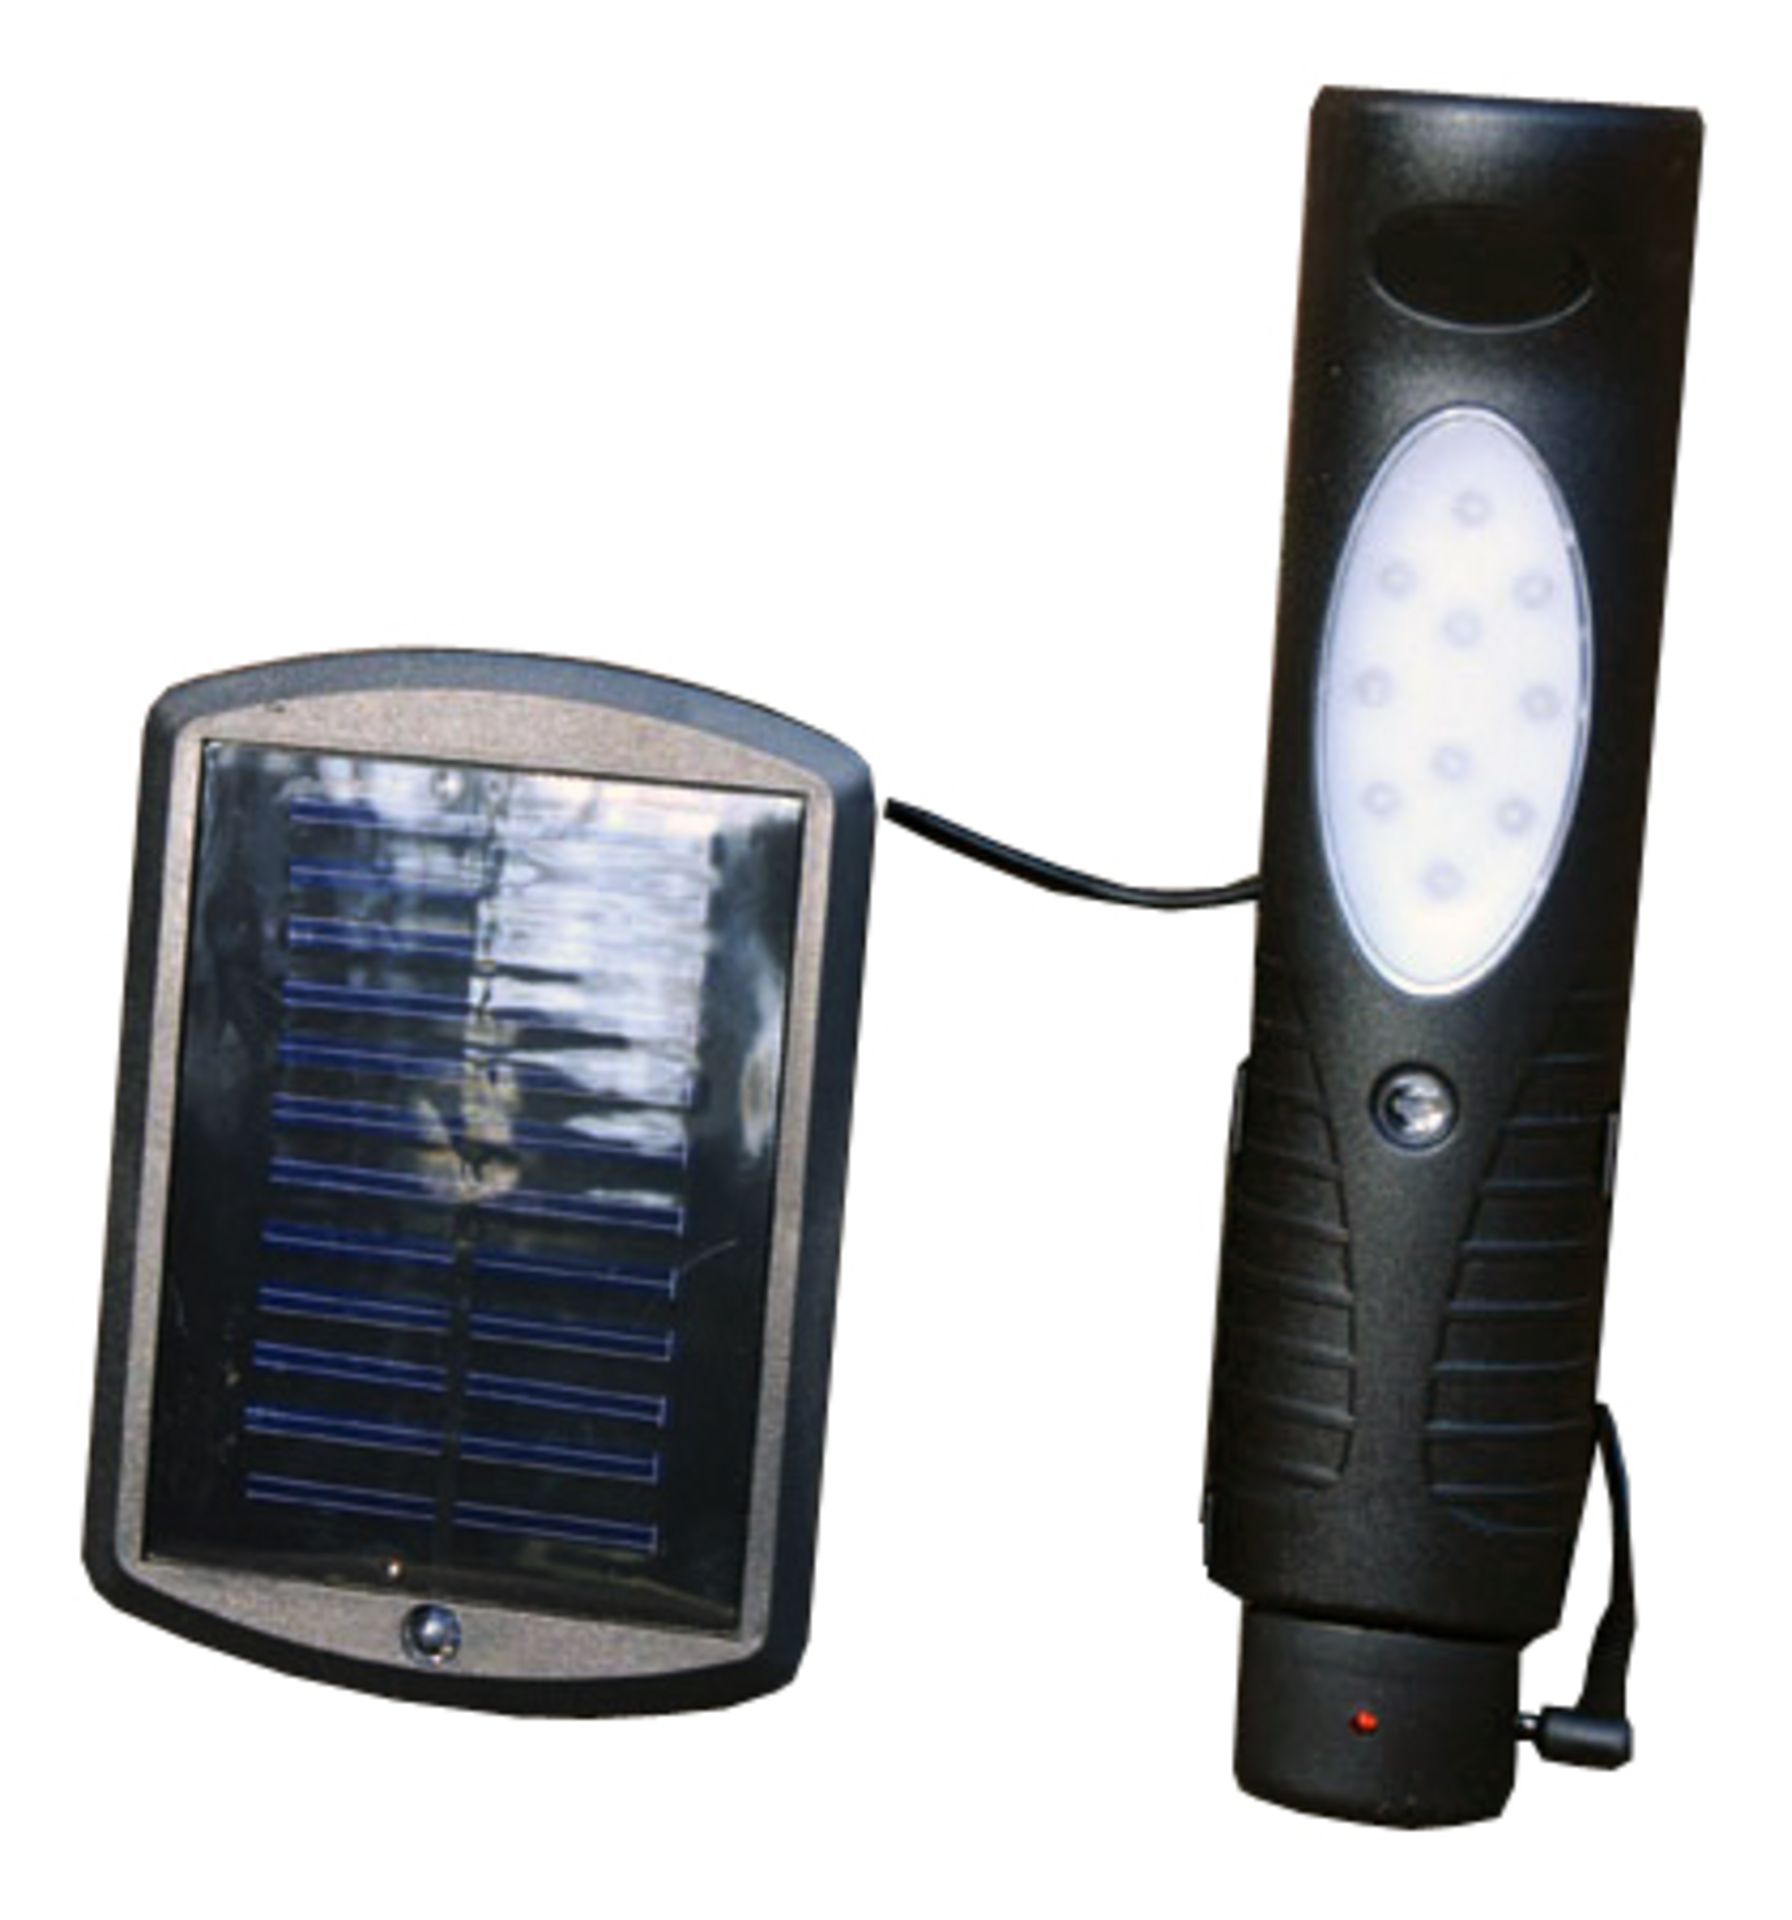 V Grade A Solar LED torch and work light suitable for sheds workshops ect RRP 25.00